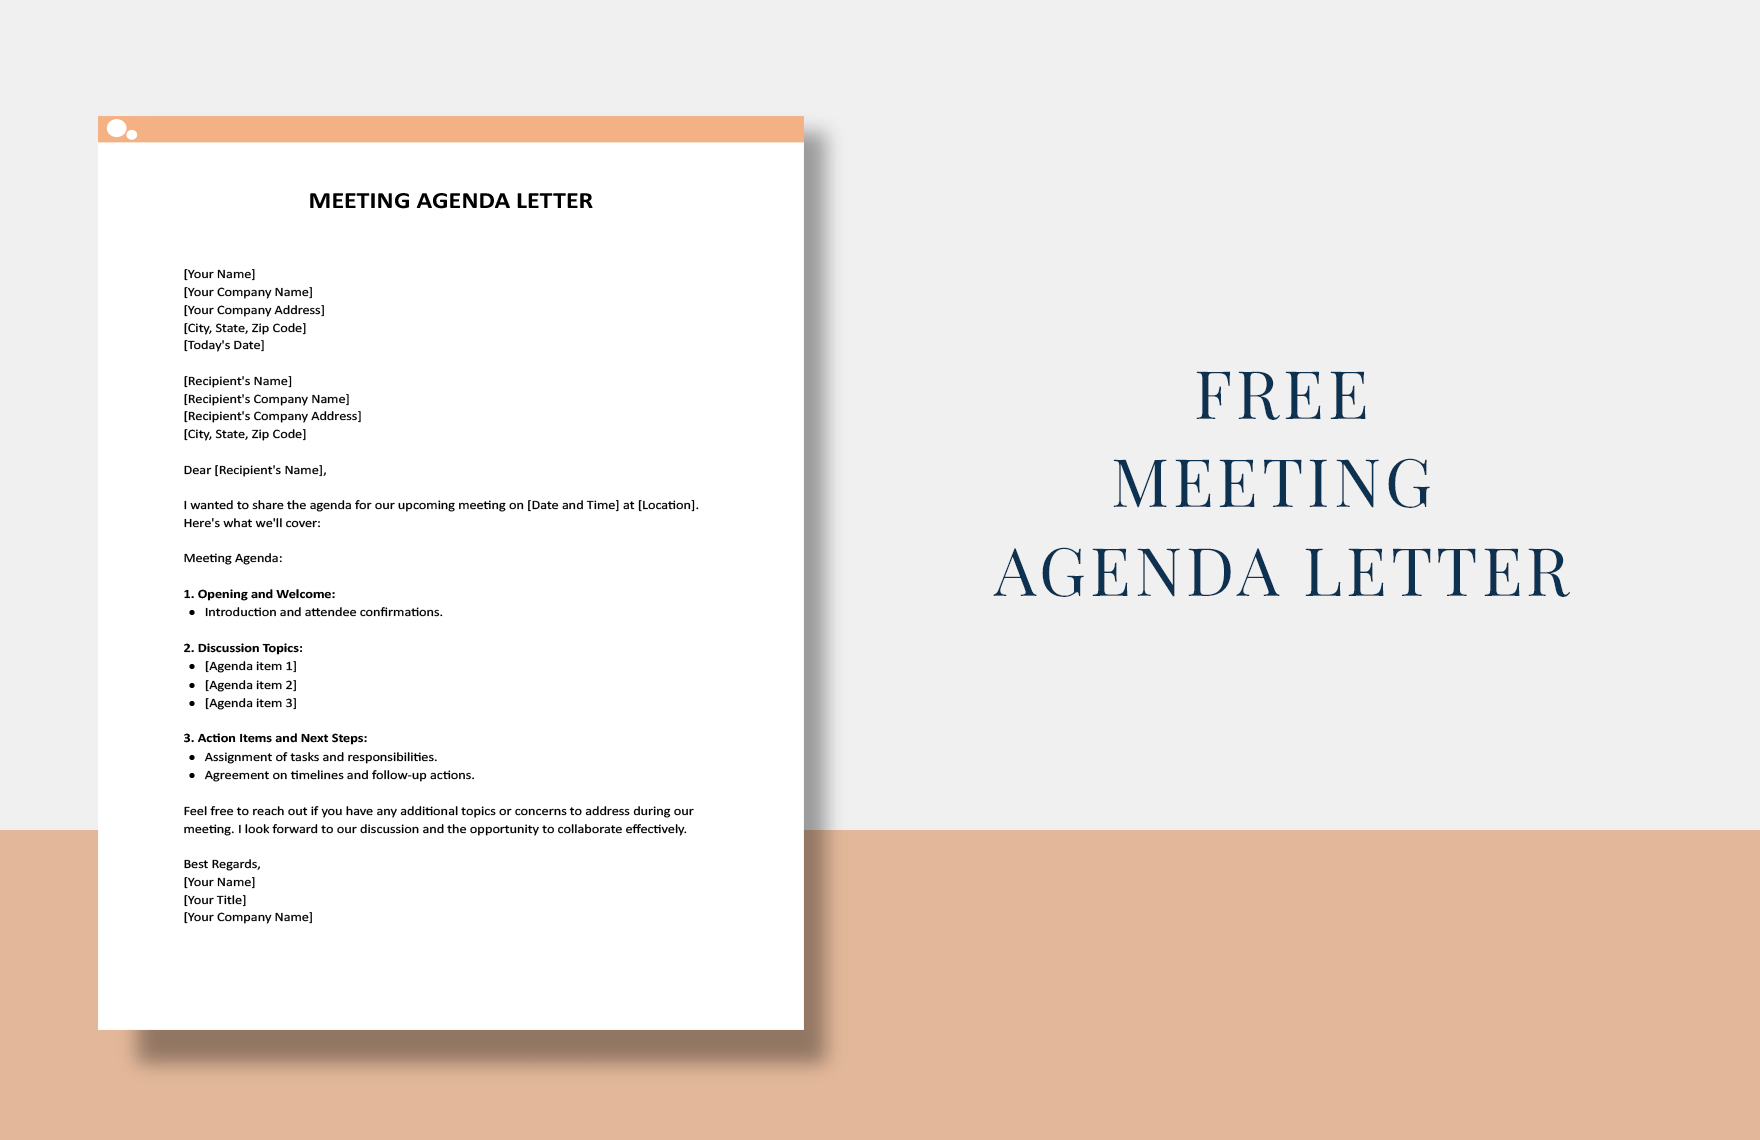 Free Meeting Agenda Letter